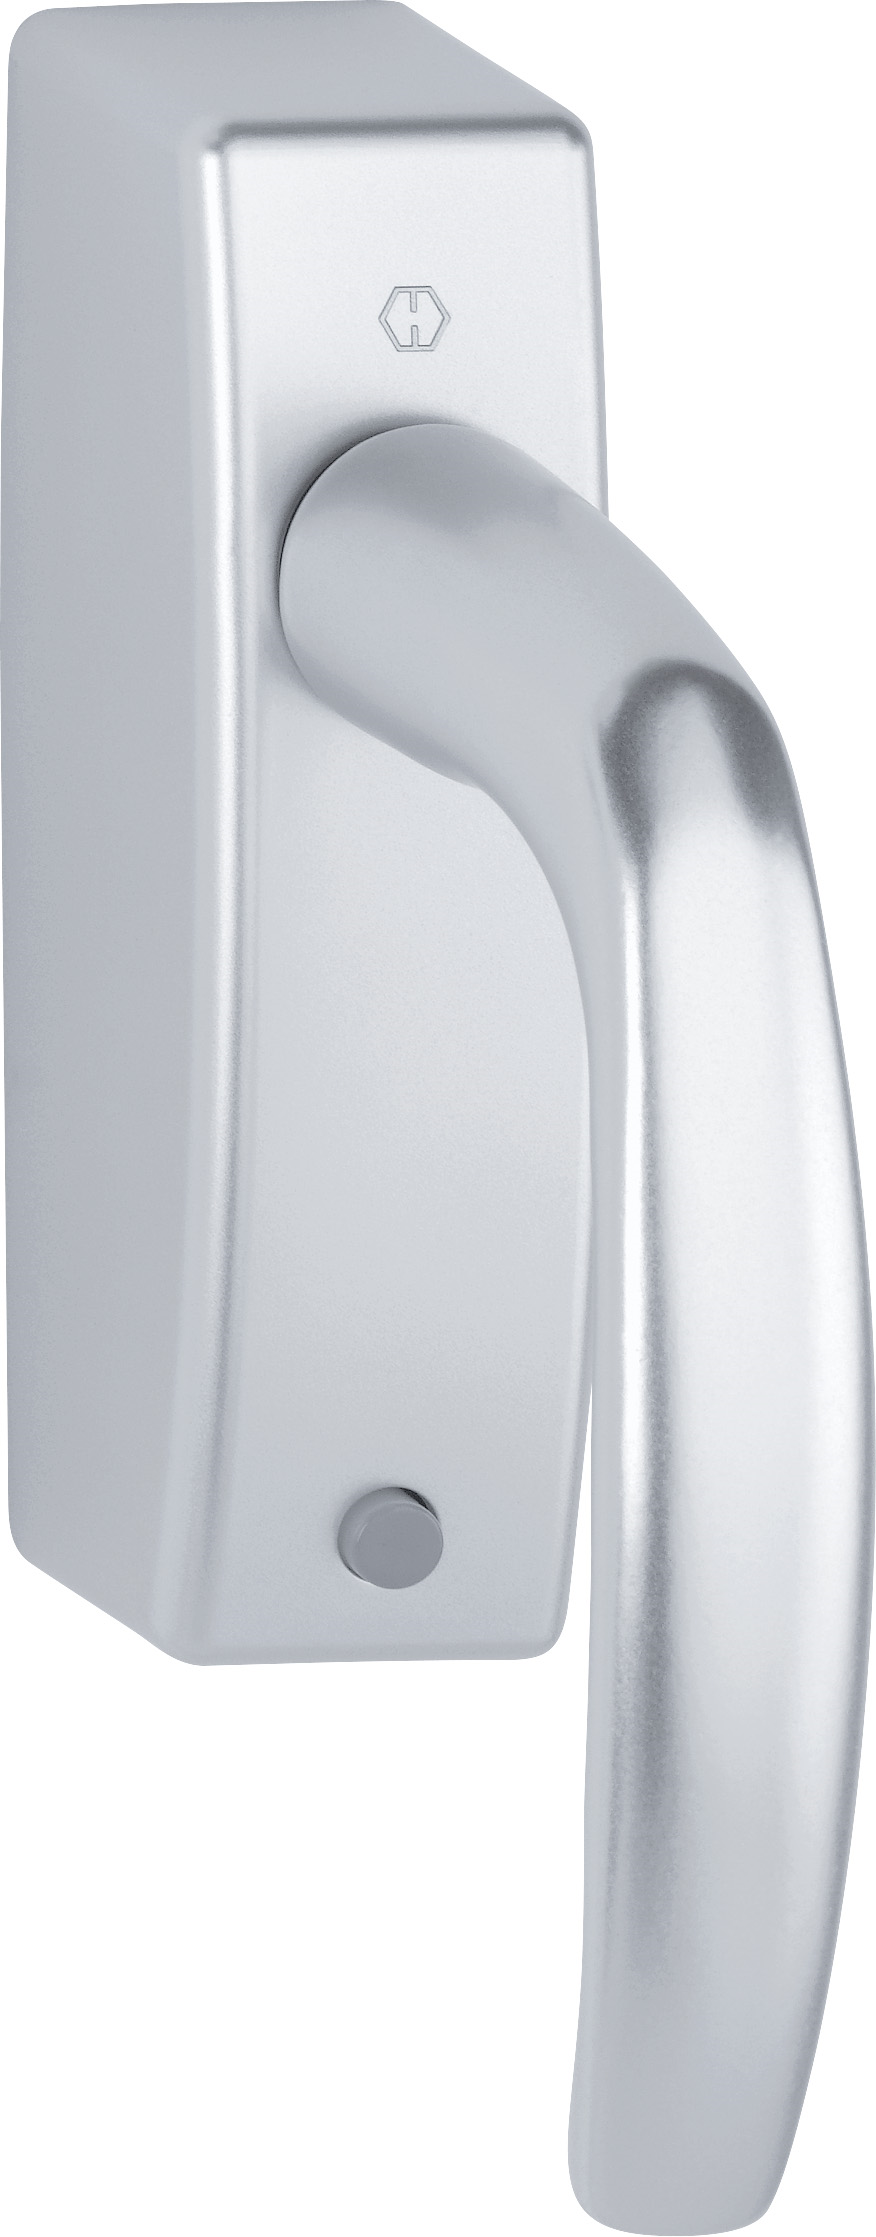 AutoLock eWindow handgreep Atlanta aluminium zilver, 32 mm pin, bidirectioneel